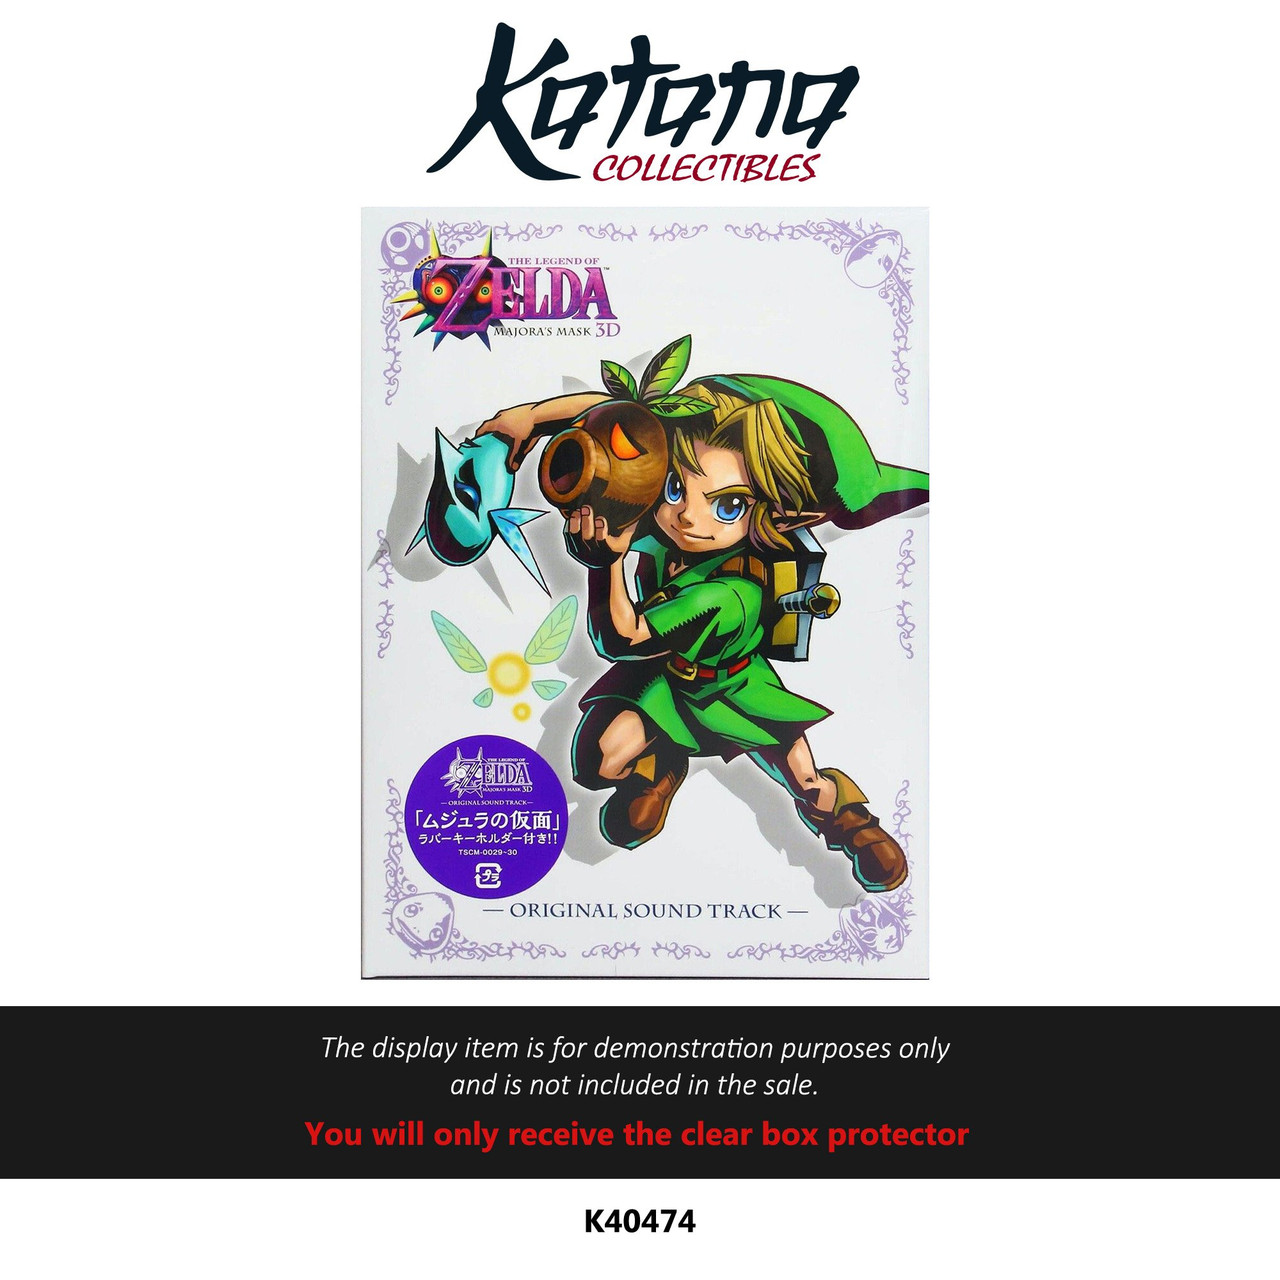 Katana Collectibles Protector For Legend of Zelda: Majoras Mask 3D Soundtrack